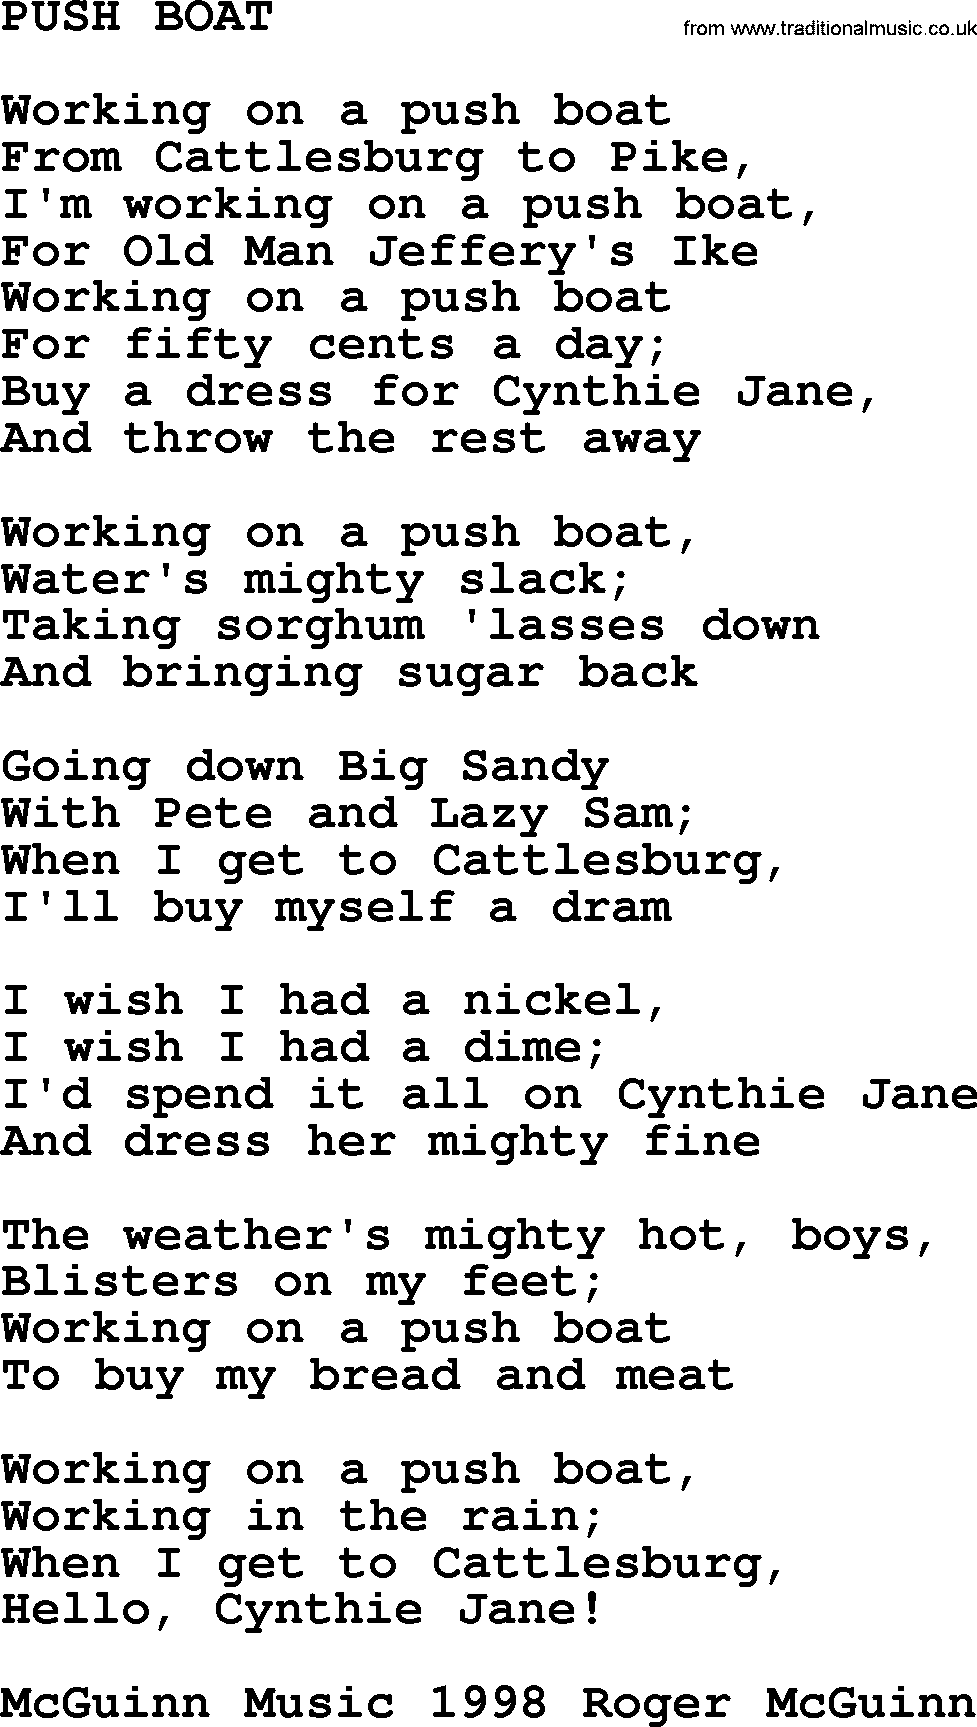 The Byrds song Push Boat, lyrics